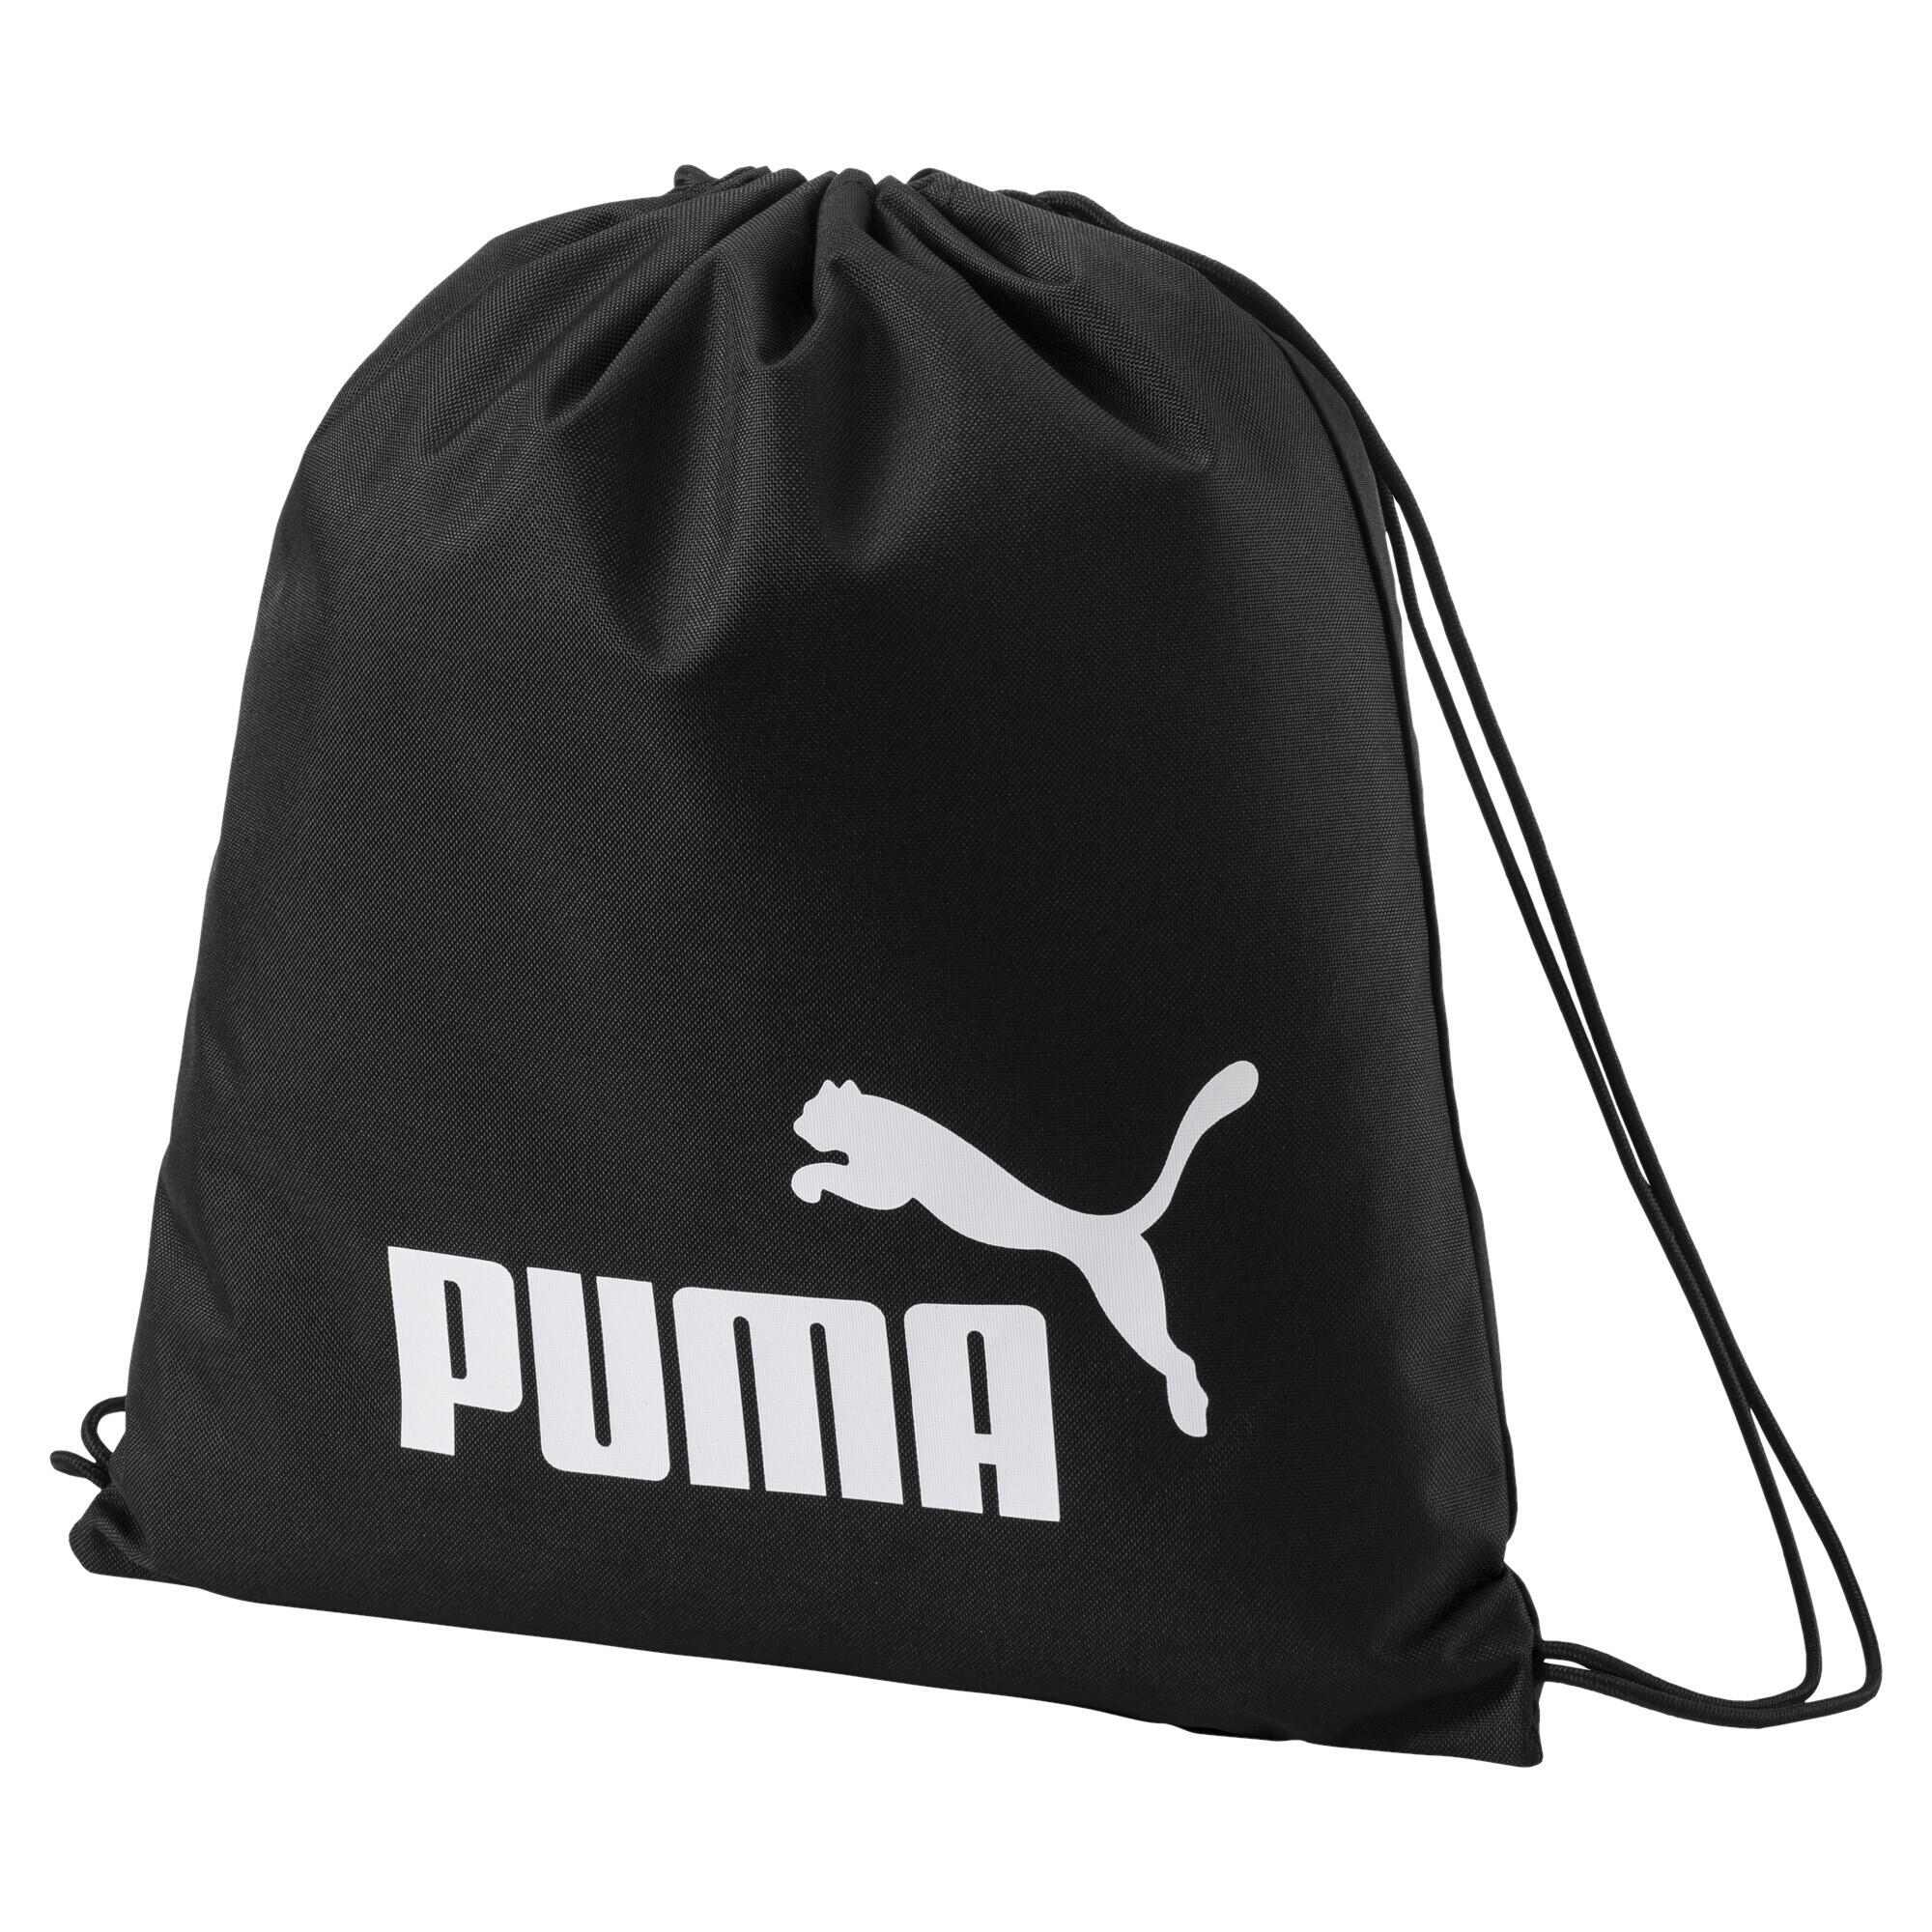 PUMA PUMA Unisex Phase Gym Bag - Black